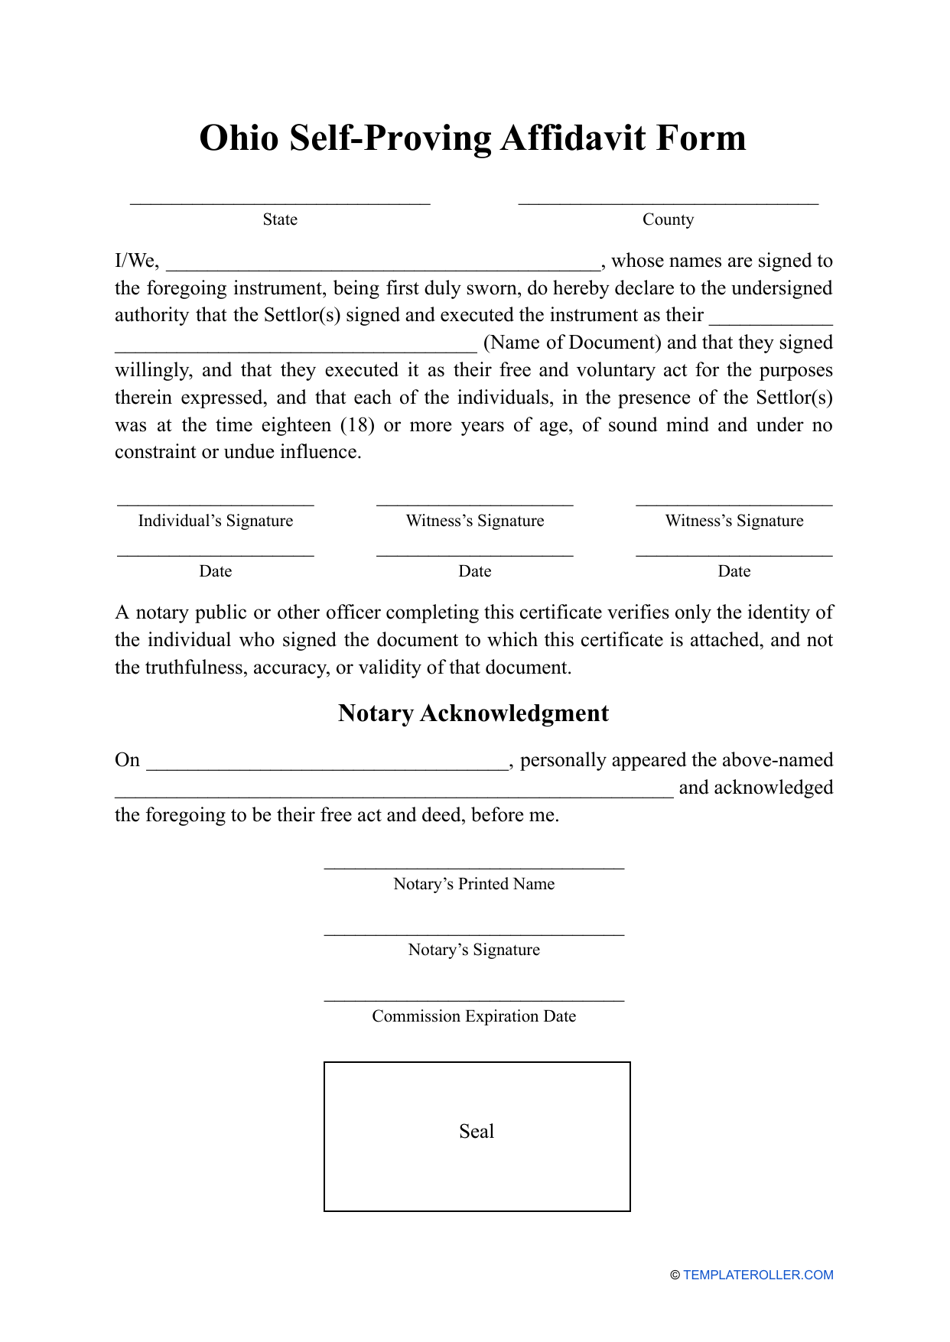 Self-proving Affidavit Form - Ohio, Page 1